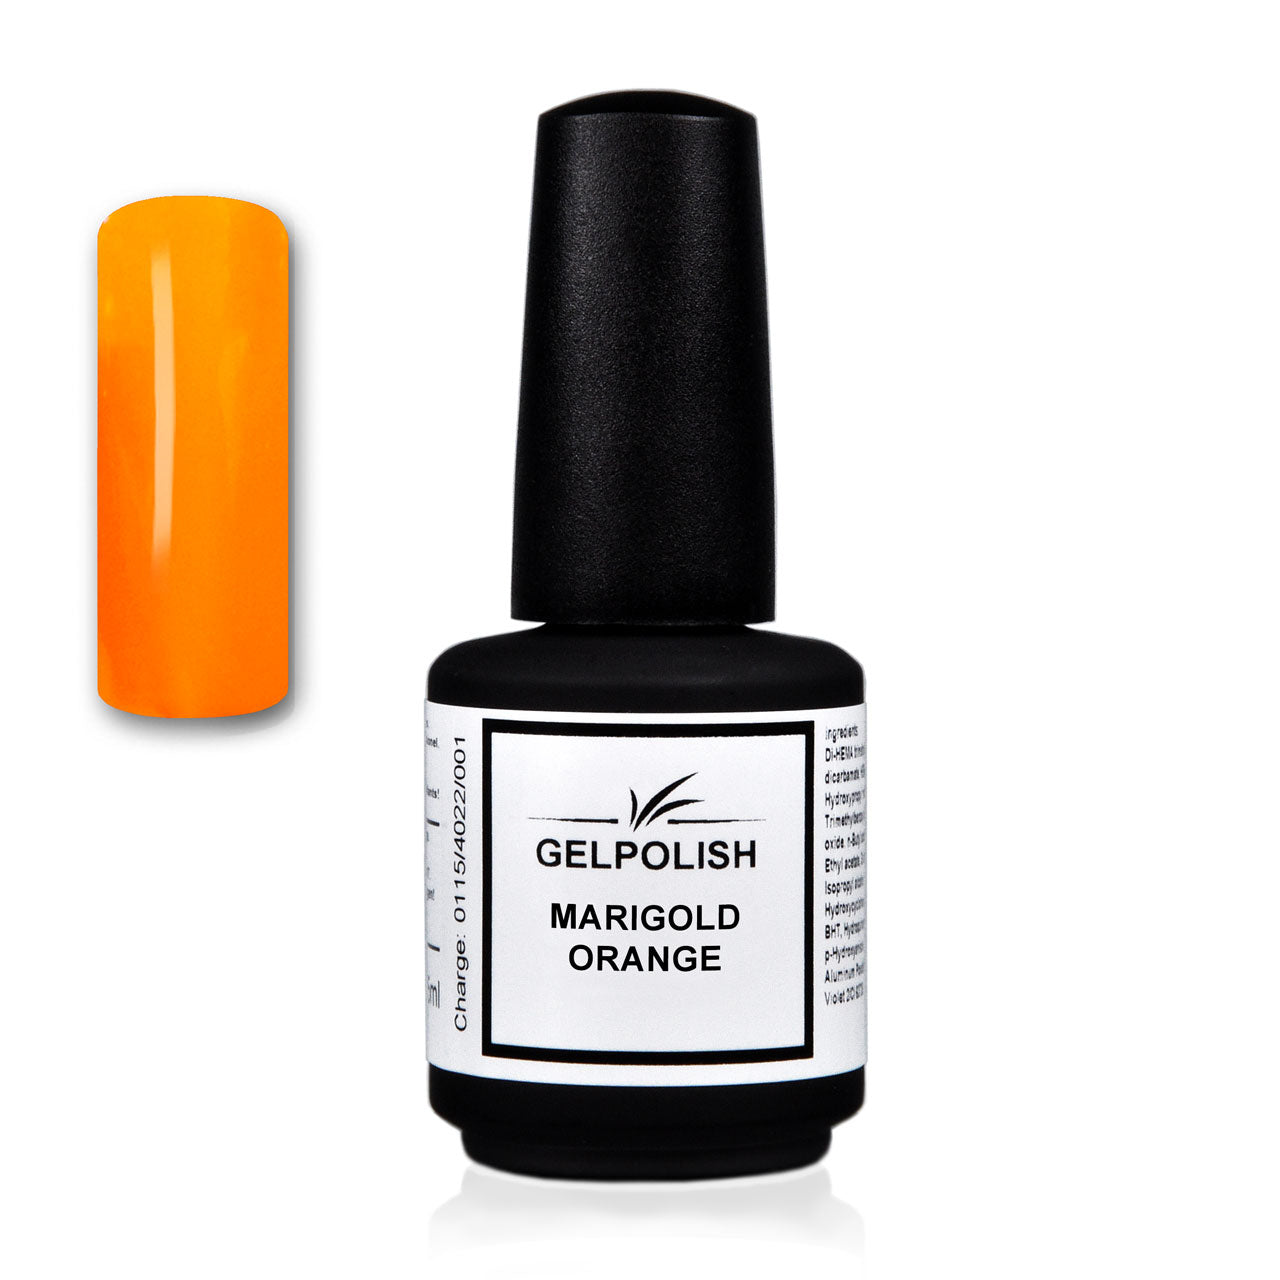 Gelpolish VSP Marigold Orange